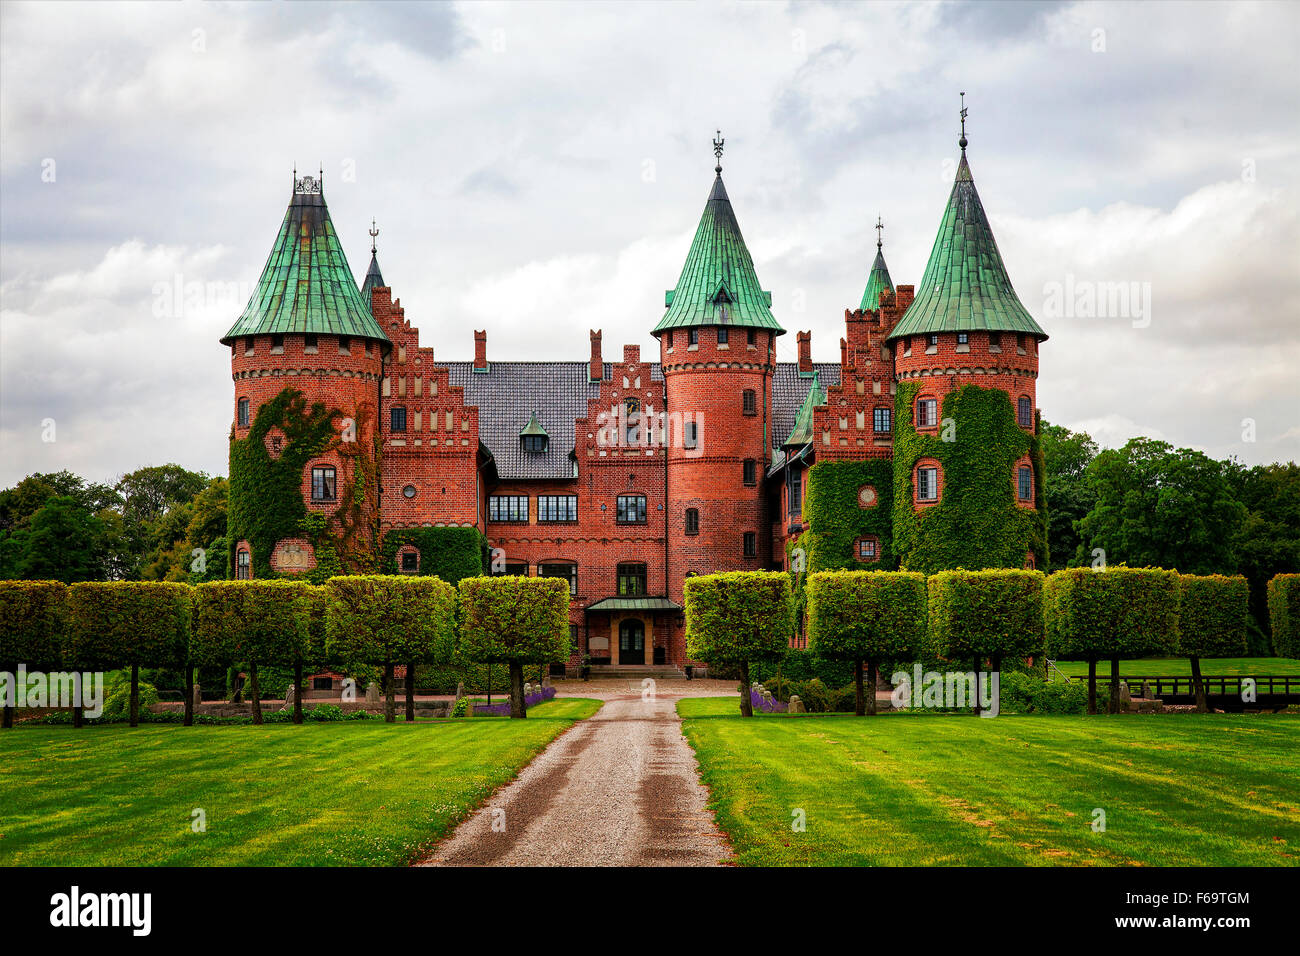 Image of Trolleholm castle, Sweden. Stock Photo